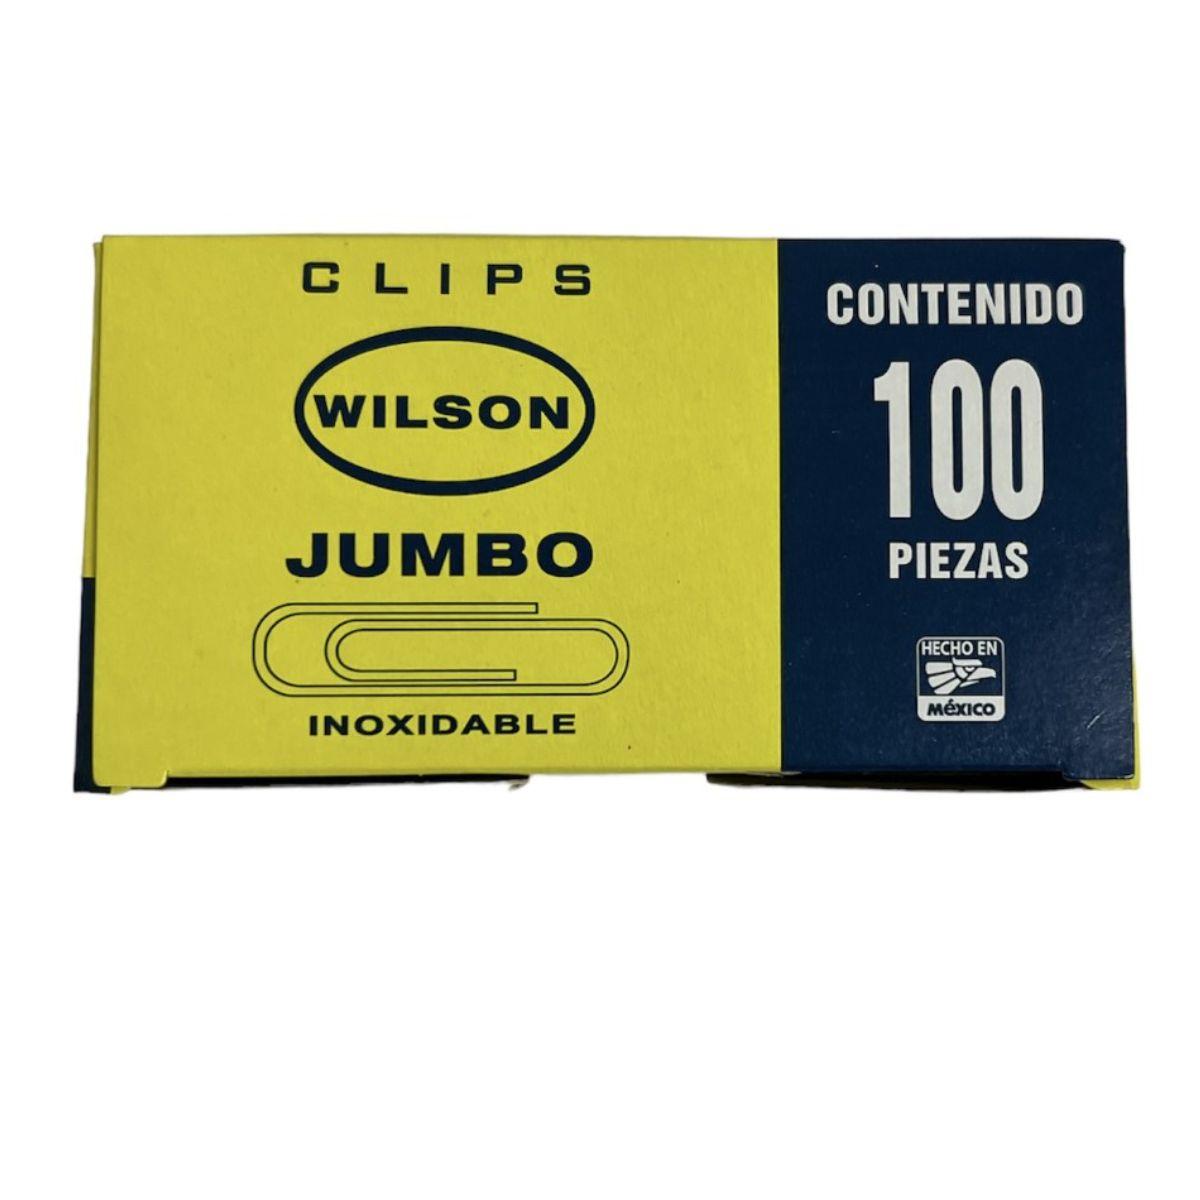 Clip jumbo Wilson - Colmenero Shop